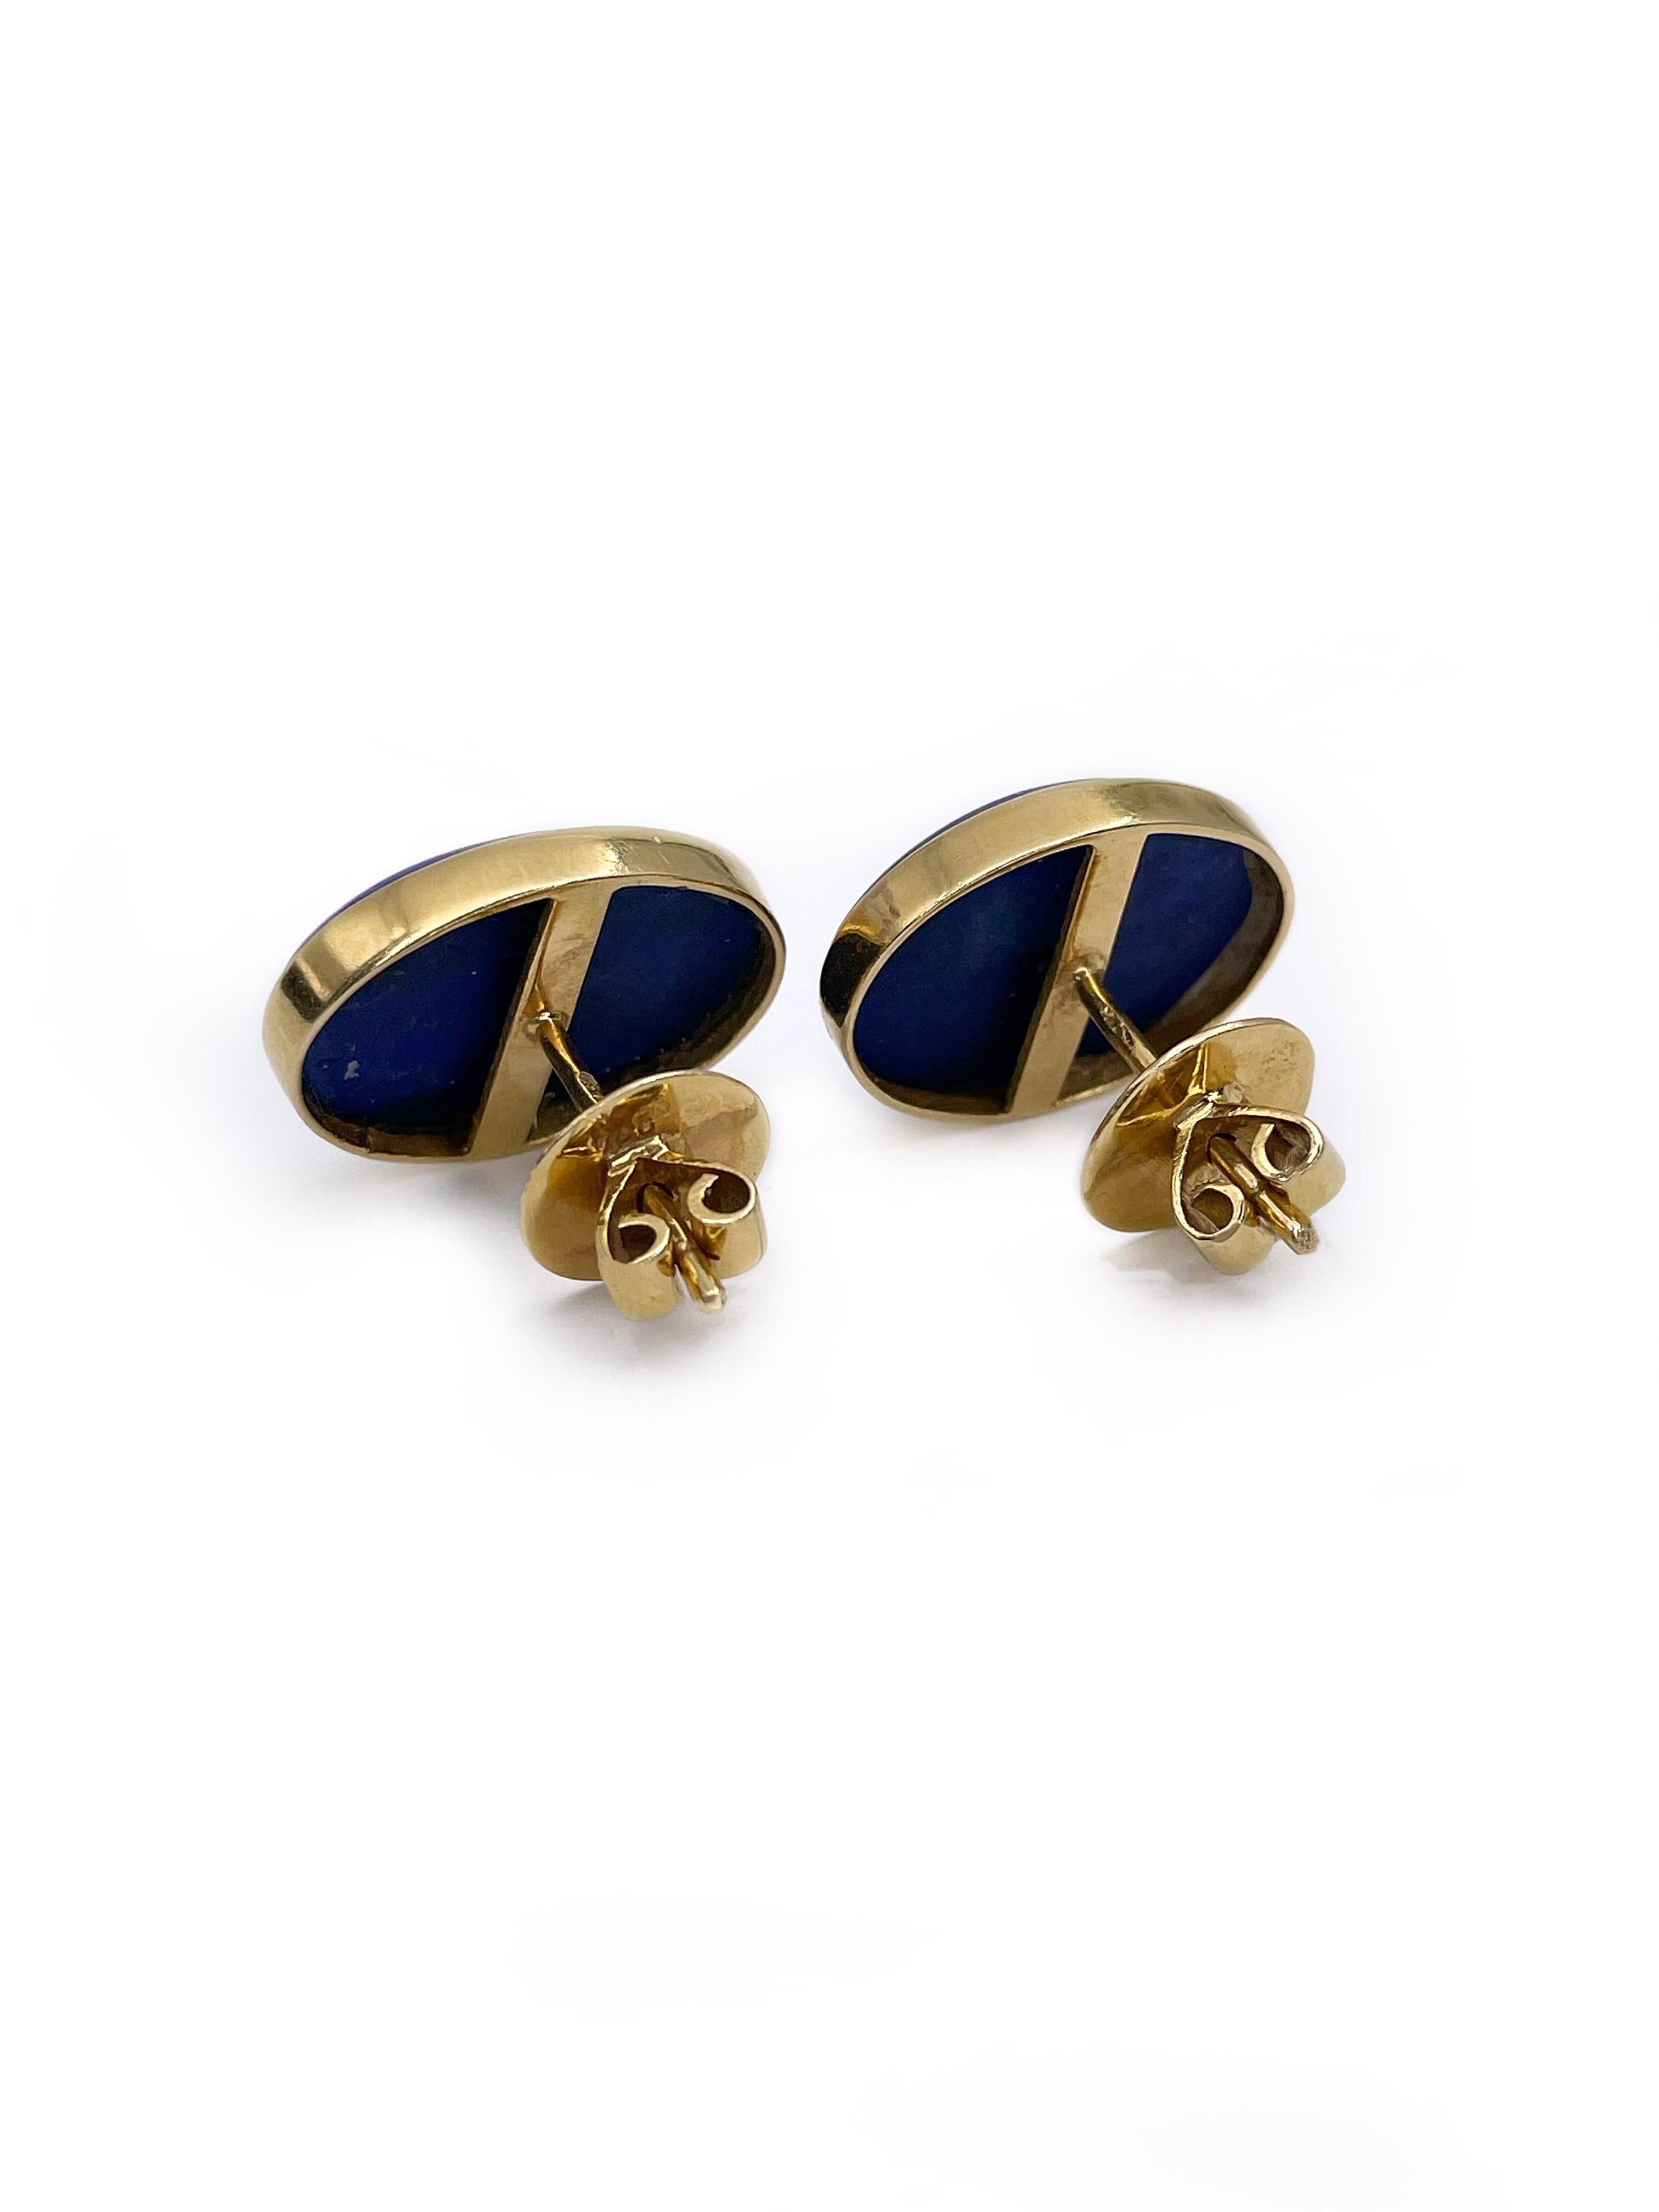 Oval Cut Vintage 18 Karat Gold 10.70 Carat Lapi Lazuli Oval Stud Earrings